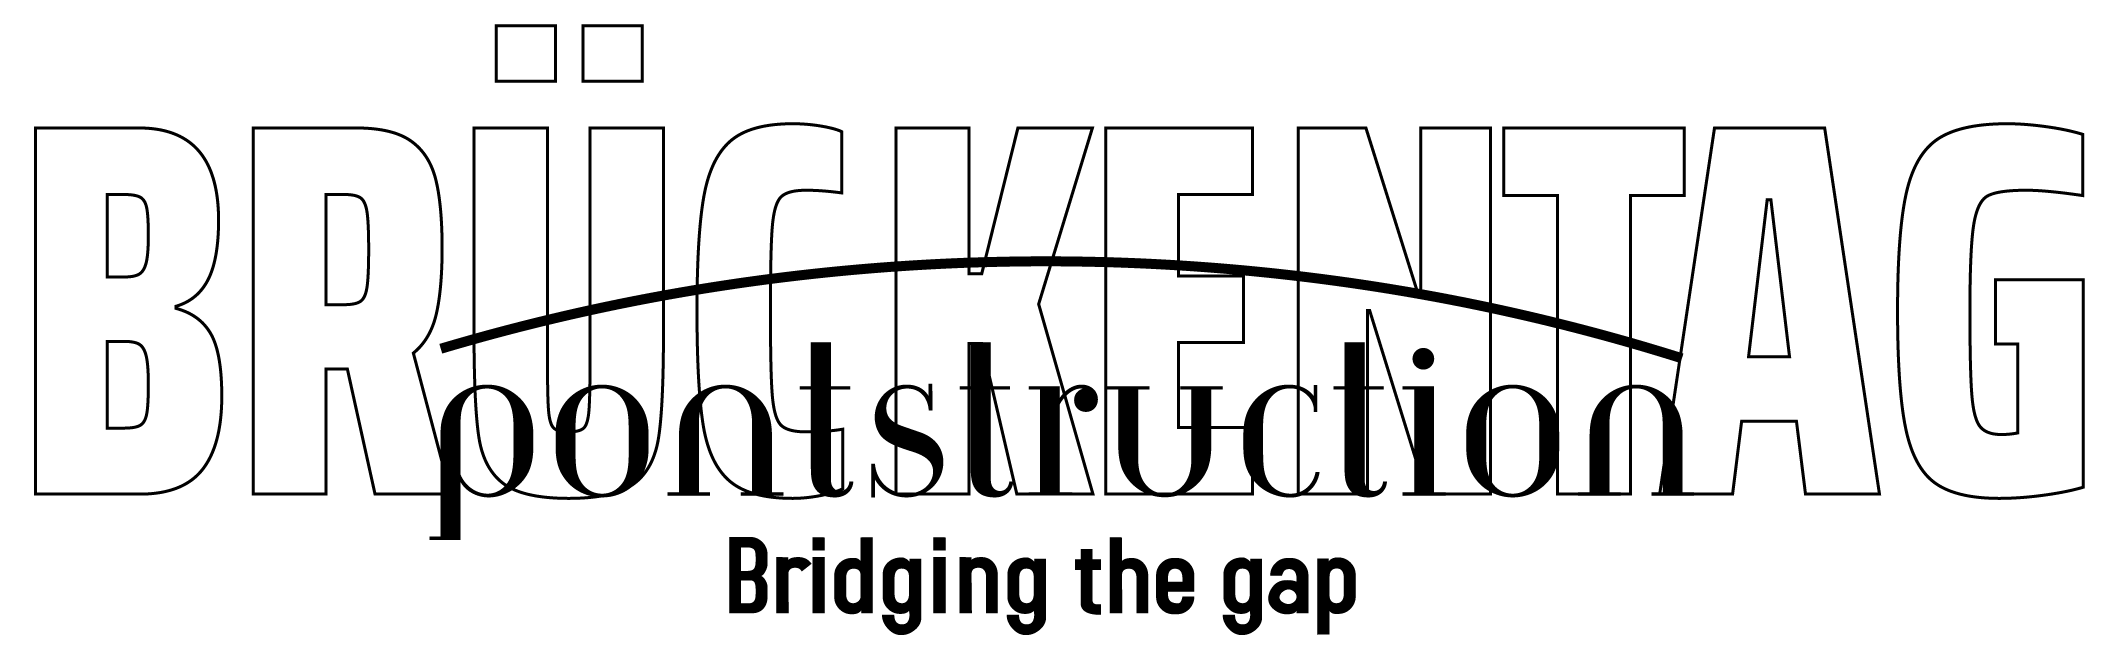 logo pontstruction_Brückentag